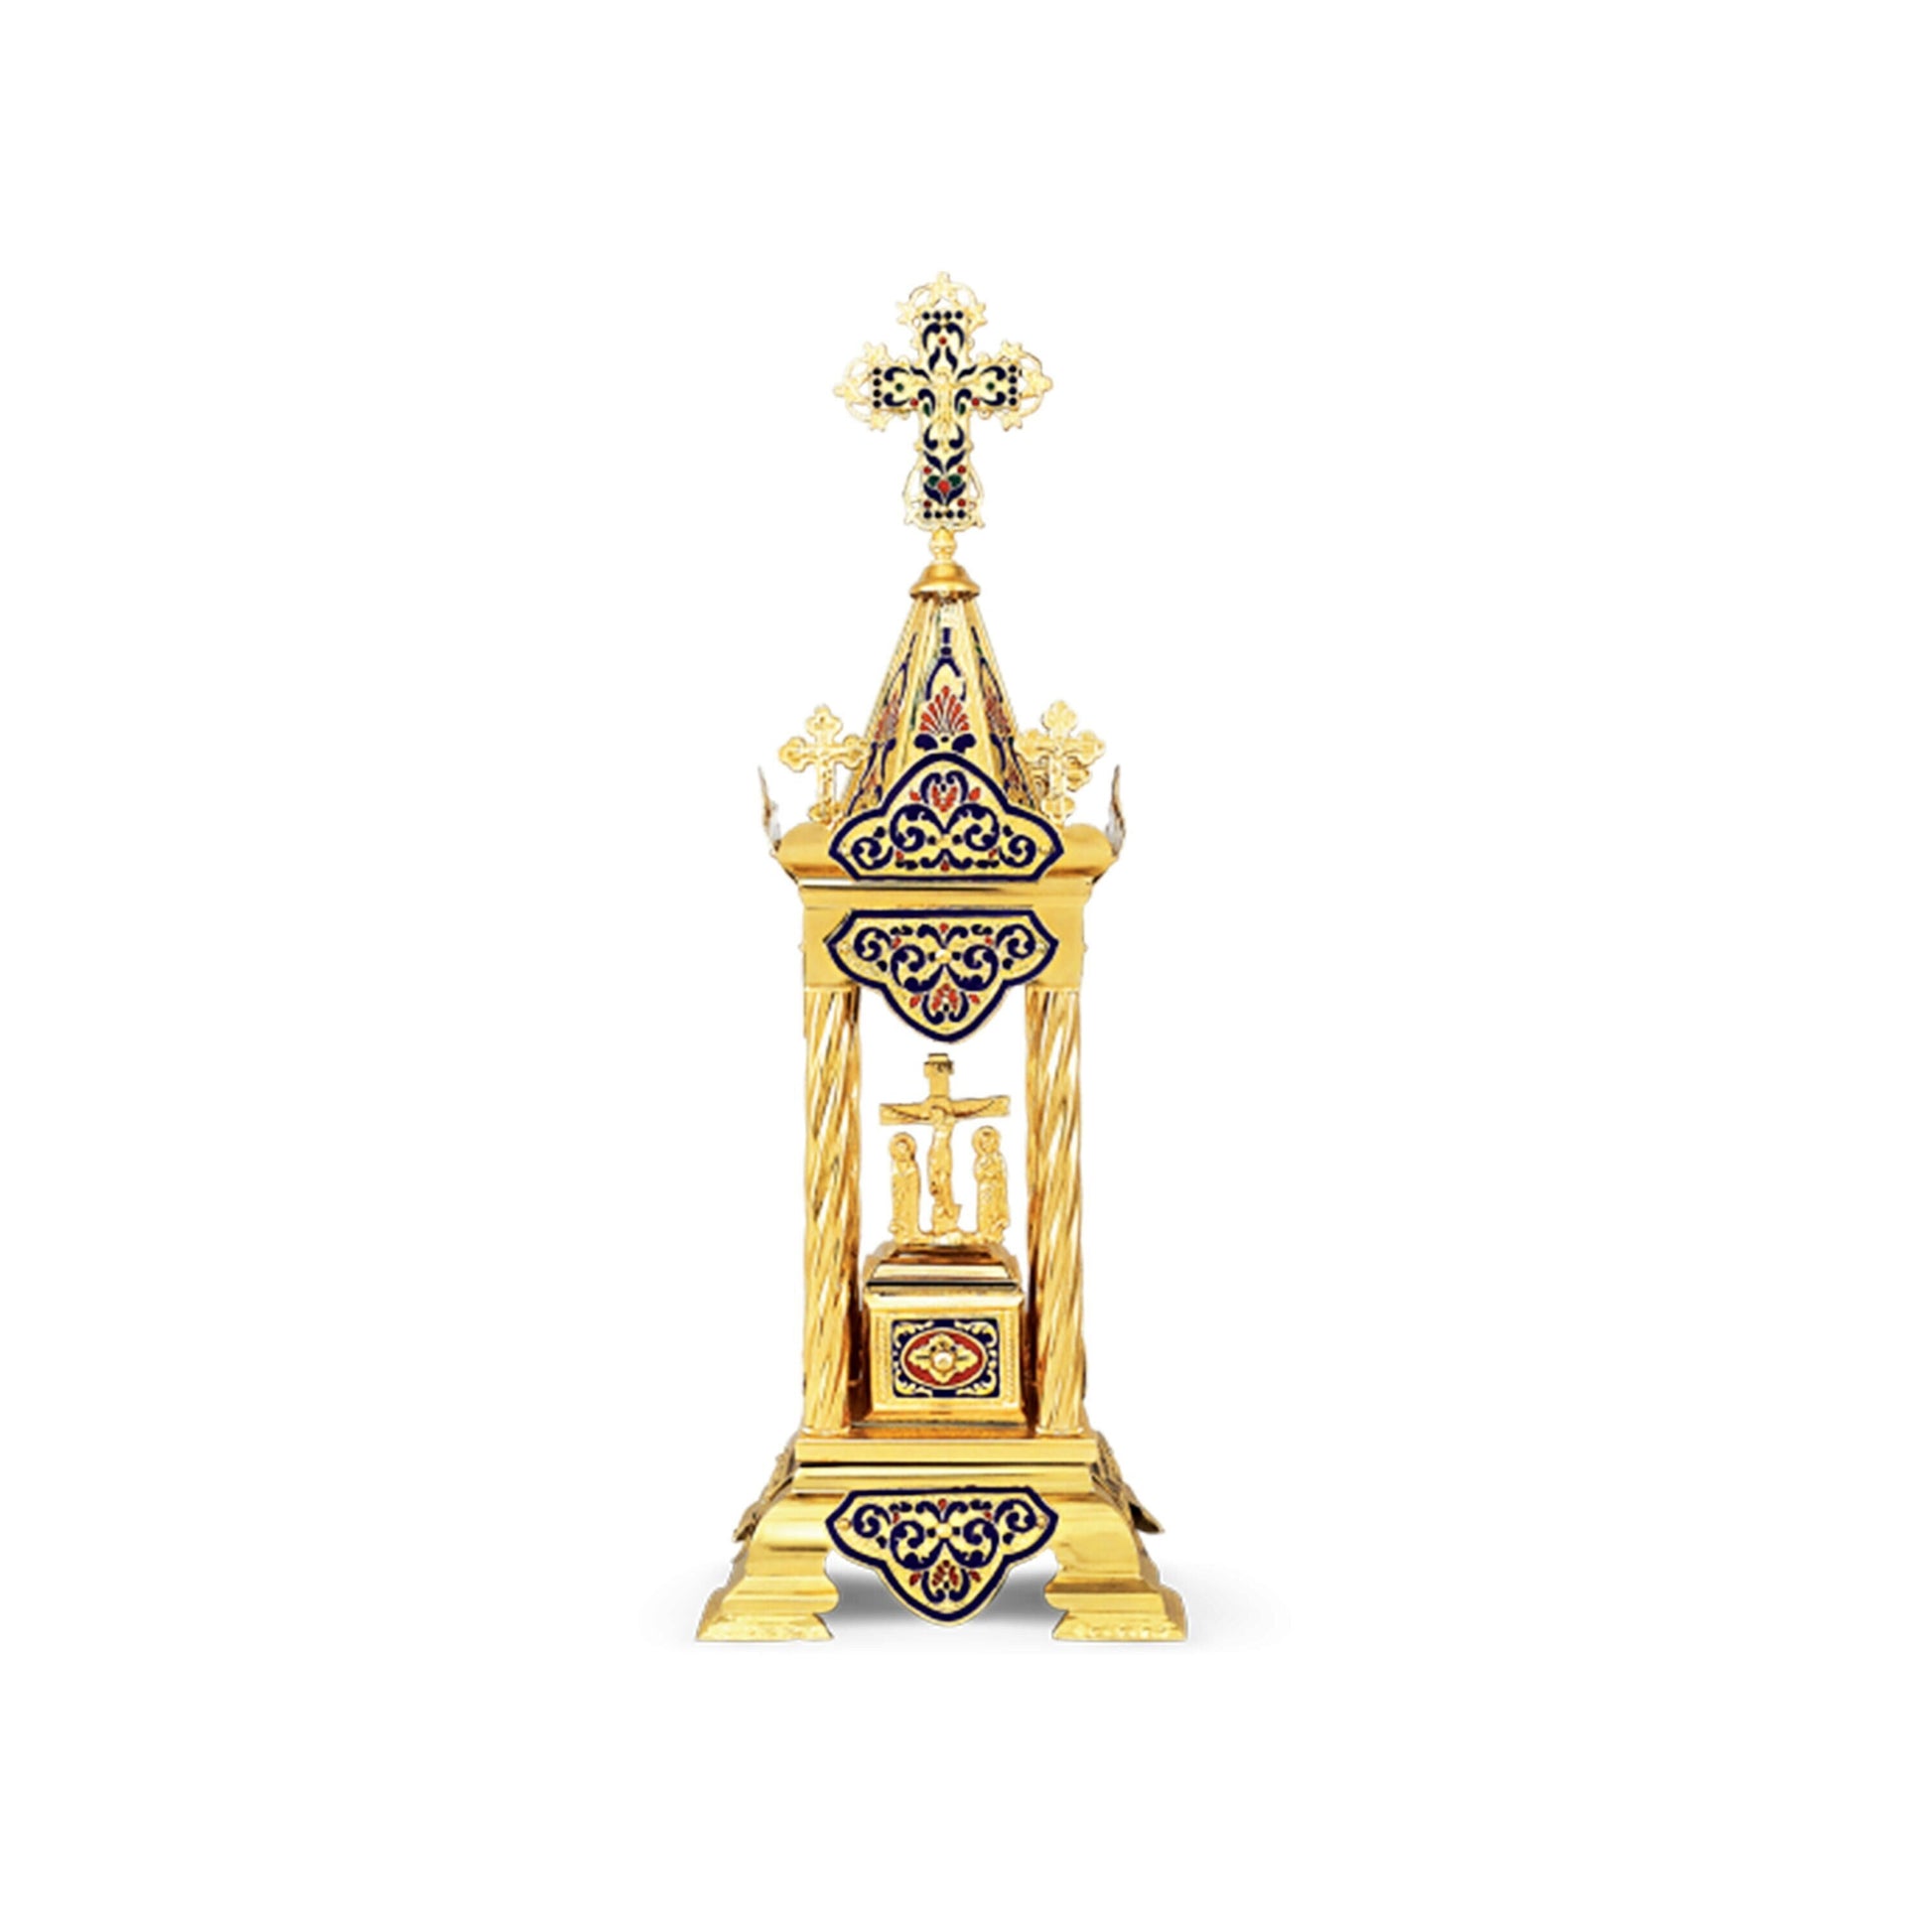 Christian Gold plated Handmade Altar Tabernacle with smalt Orthodox Altar Church Tabernacle Monstrance Handmade Pyx Artoforio religious gift